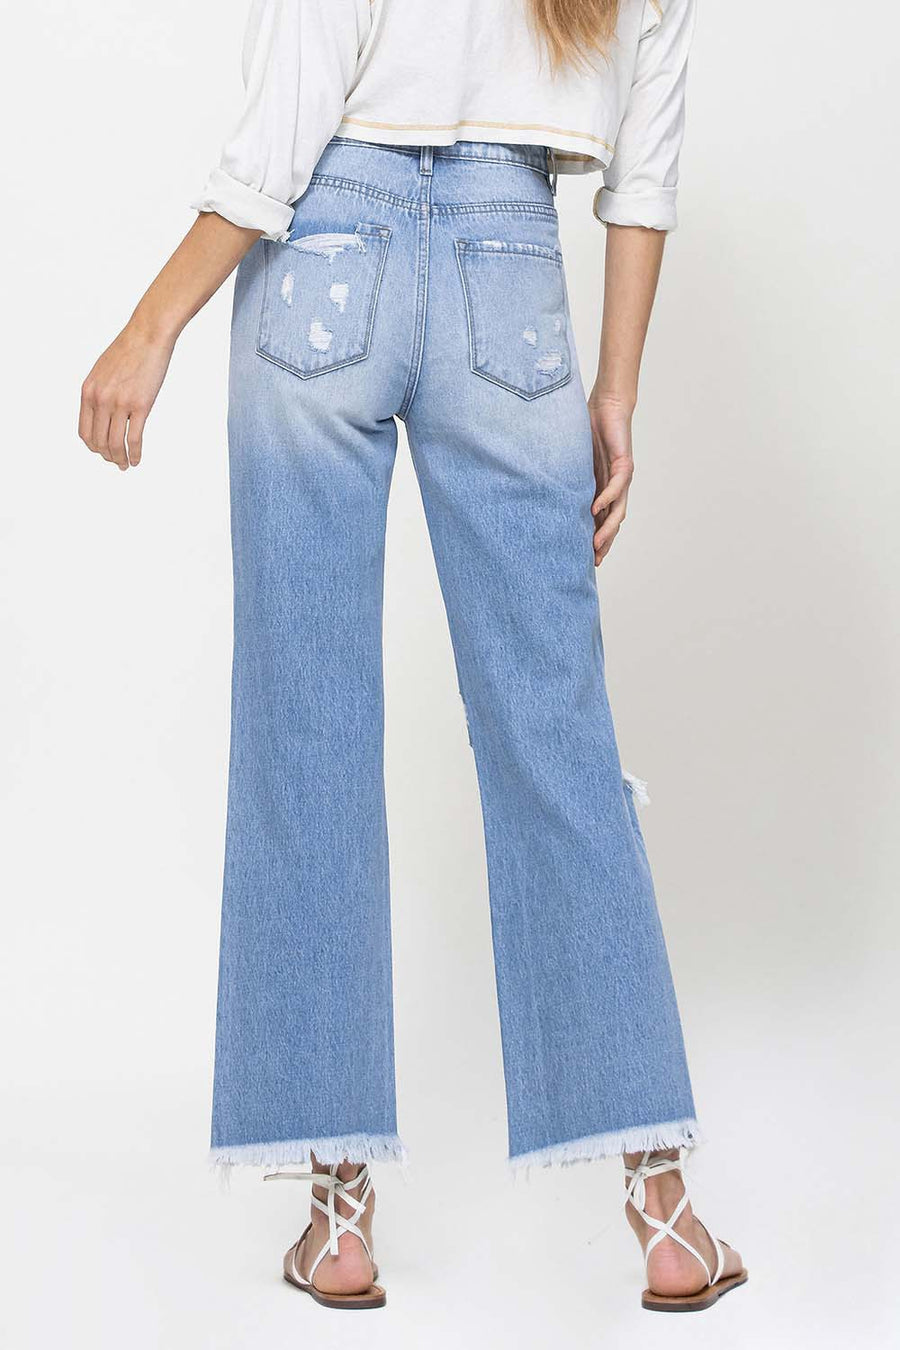 Georgia Twilight Jeans